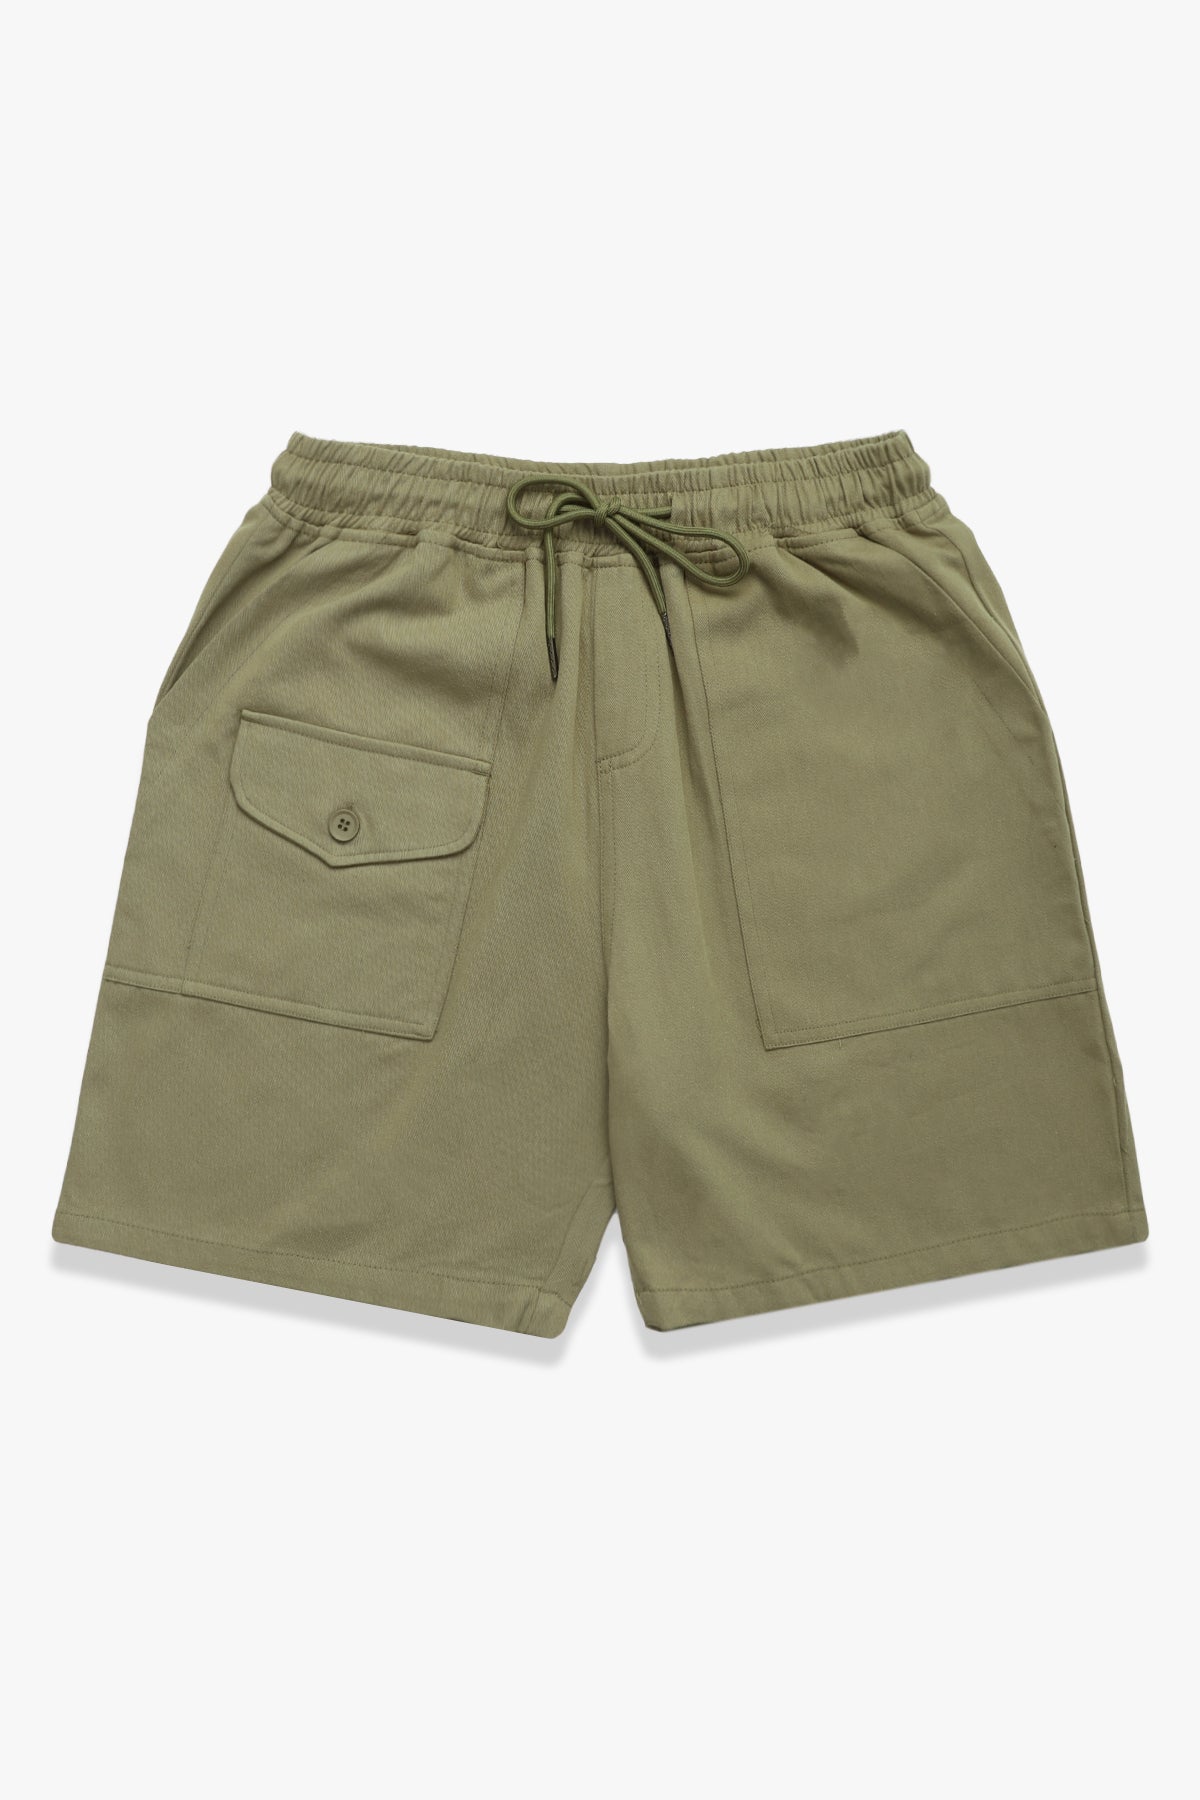 Blacksmith - Beach Cargo Shorts - Olive